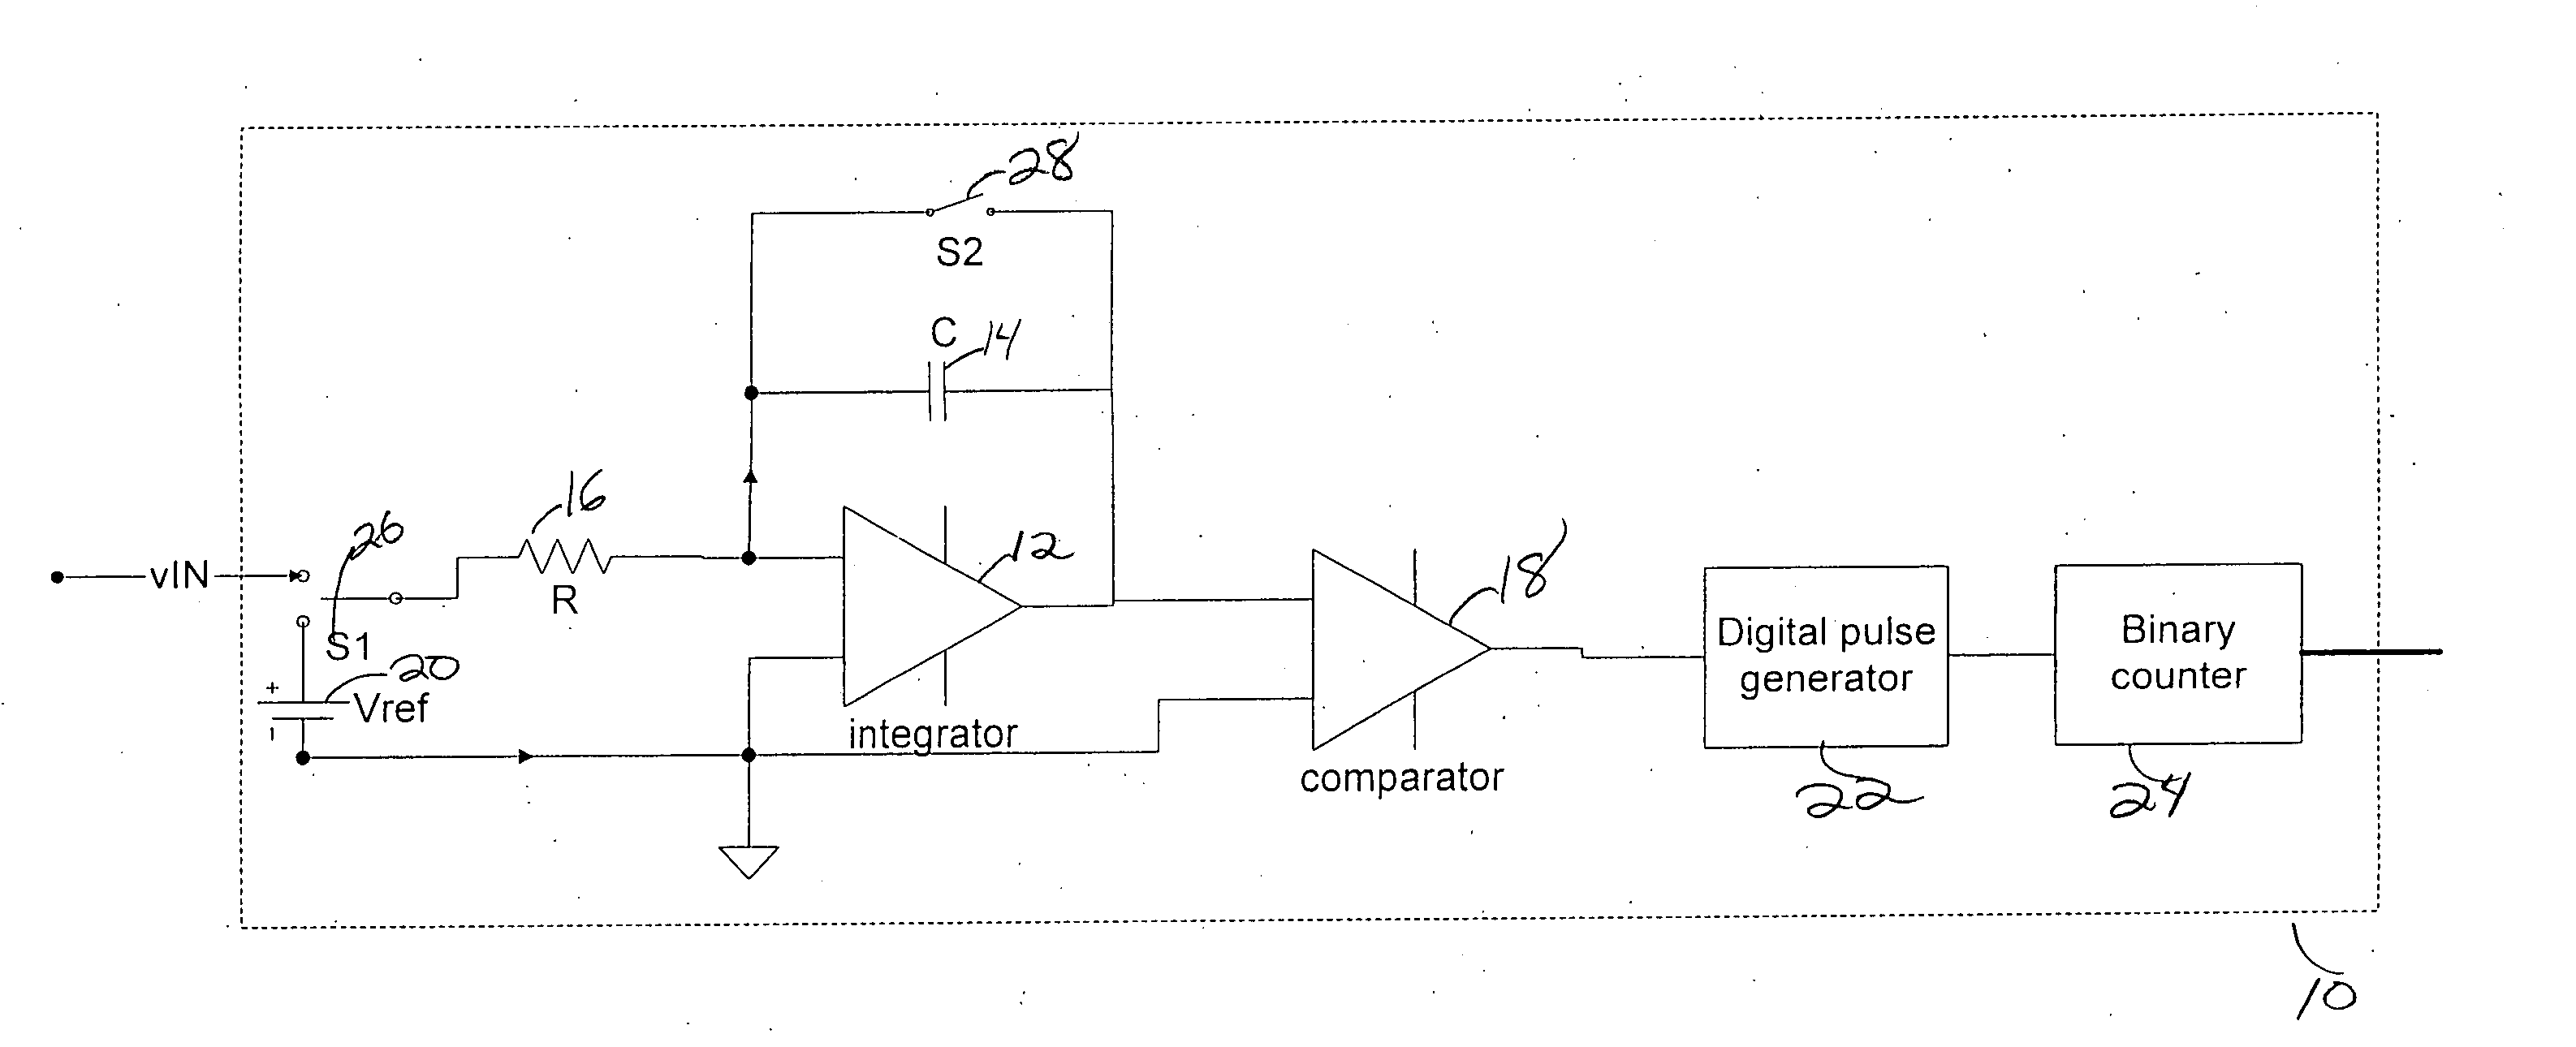 Double feedback rotary traveling wave oscillator driven sampler circuits